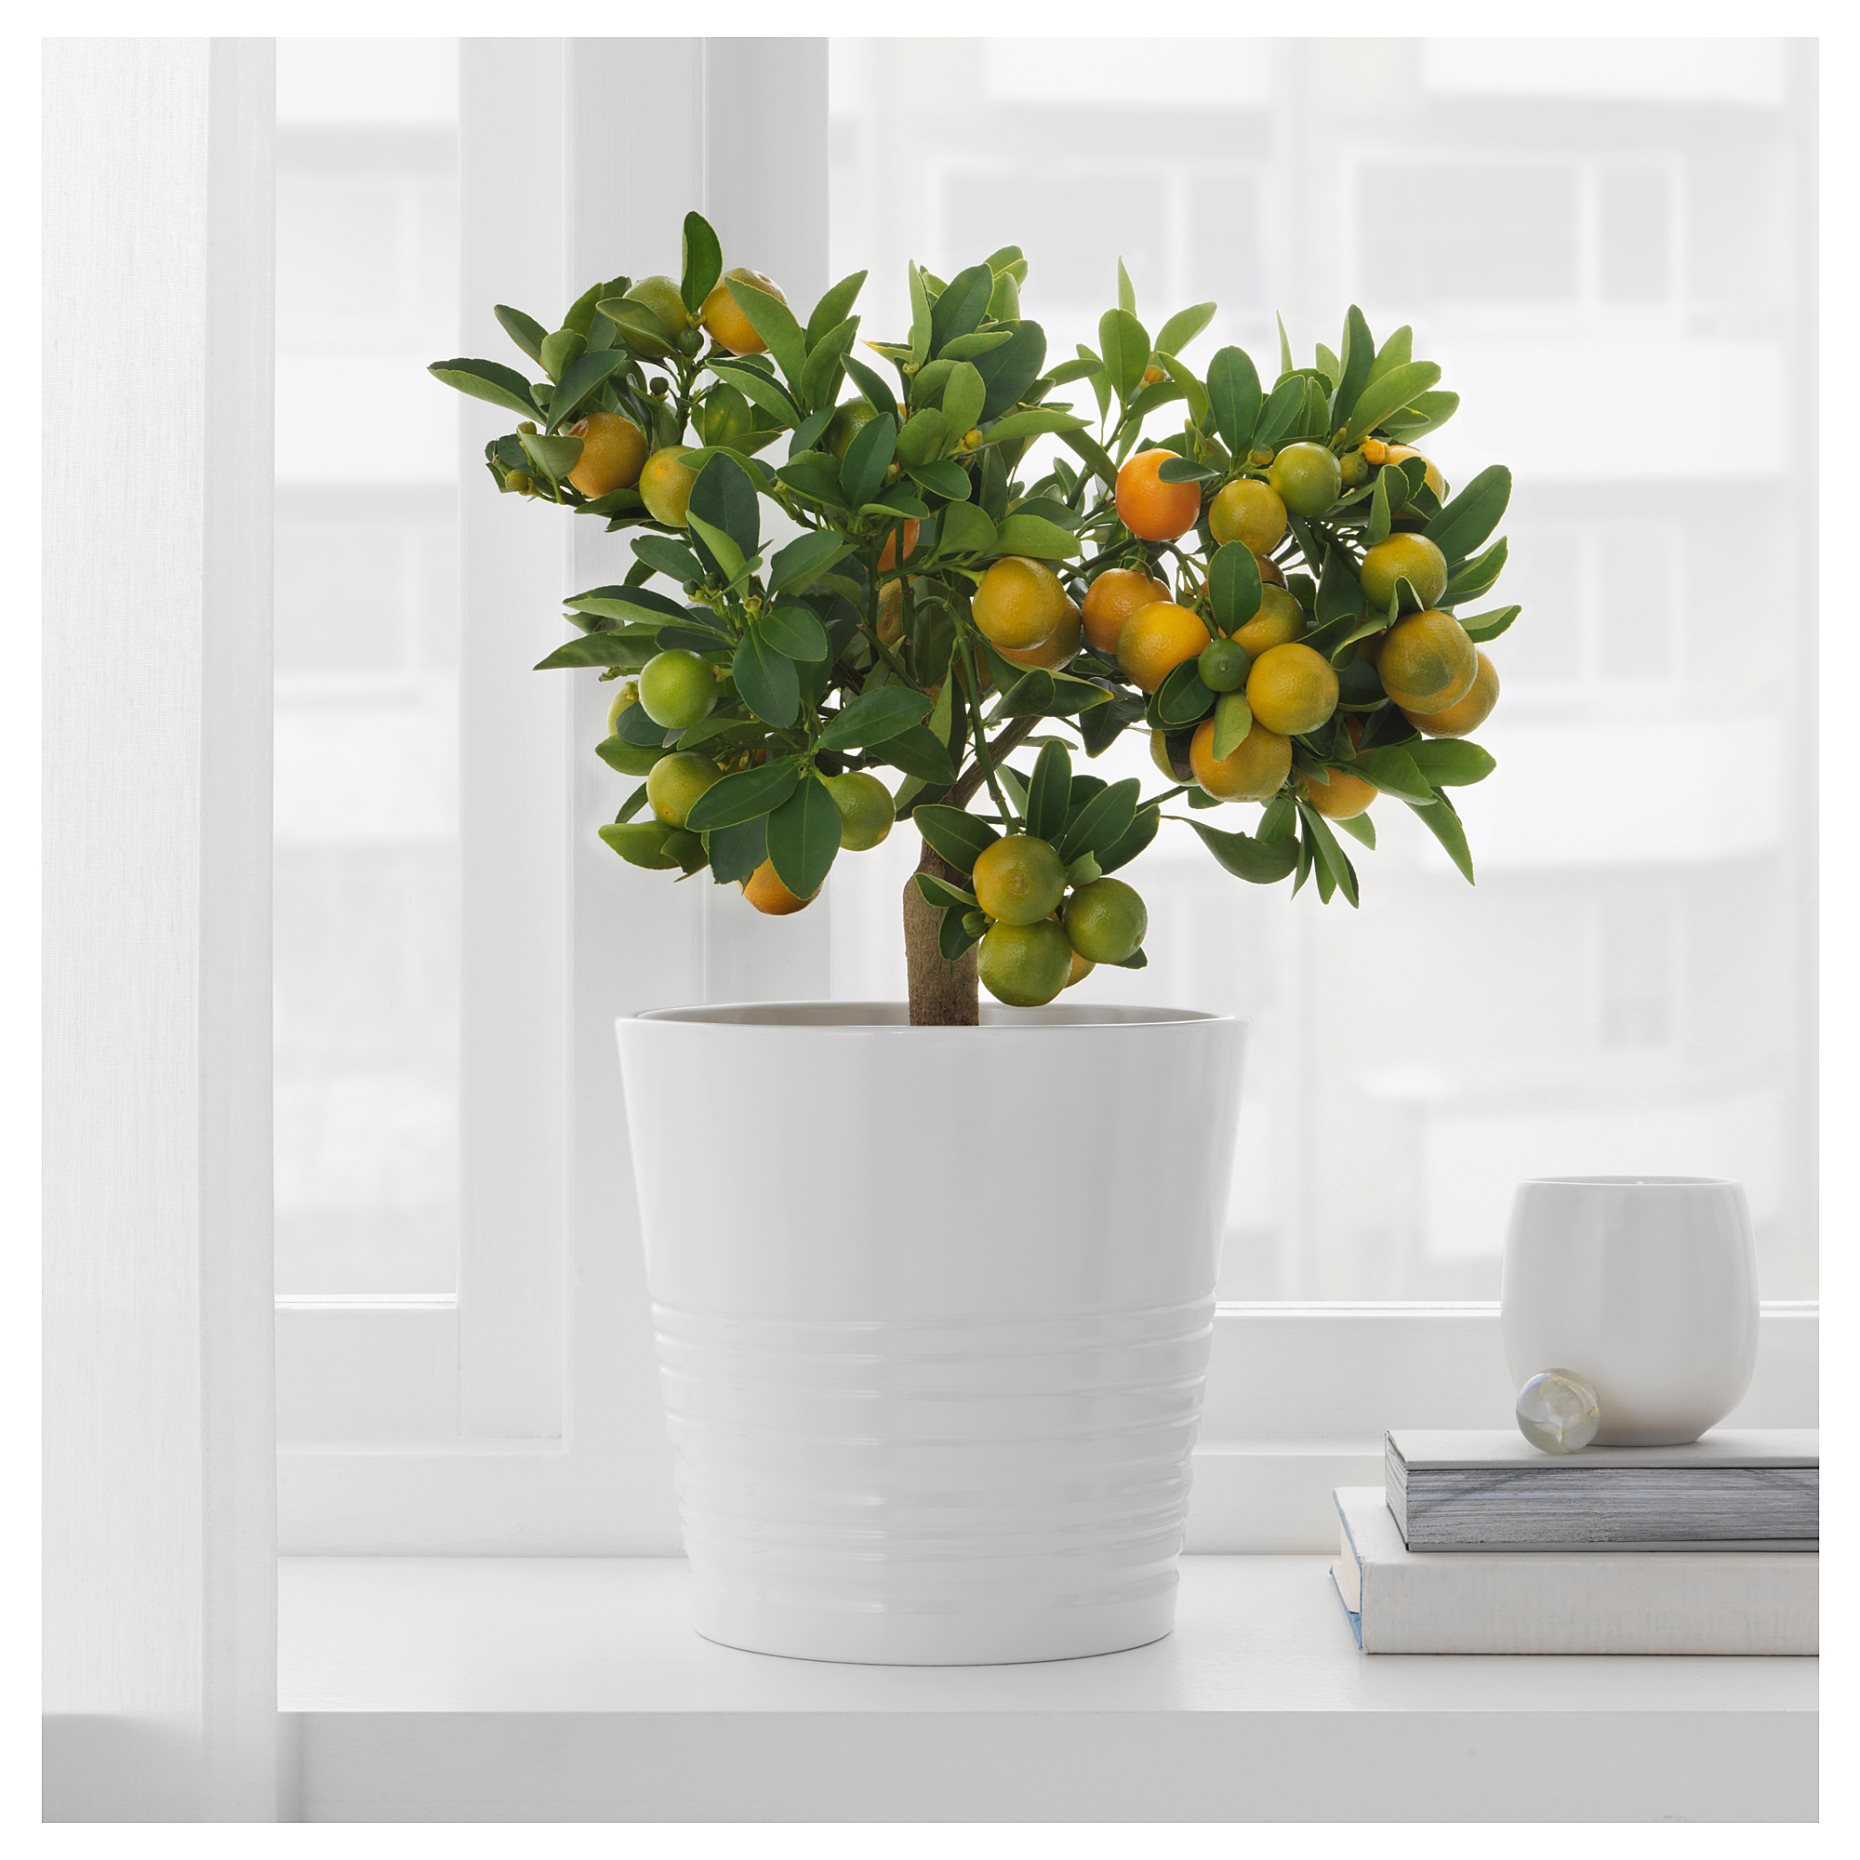 CITRUS, φυτό σε γλάστρα/Καλαμοντίν, 15 cm, 405.746.28